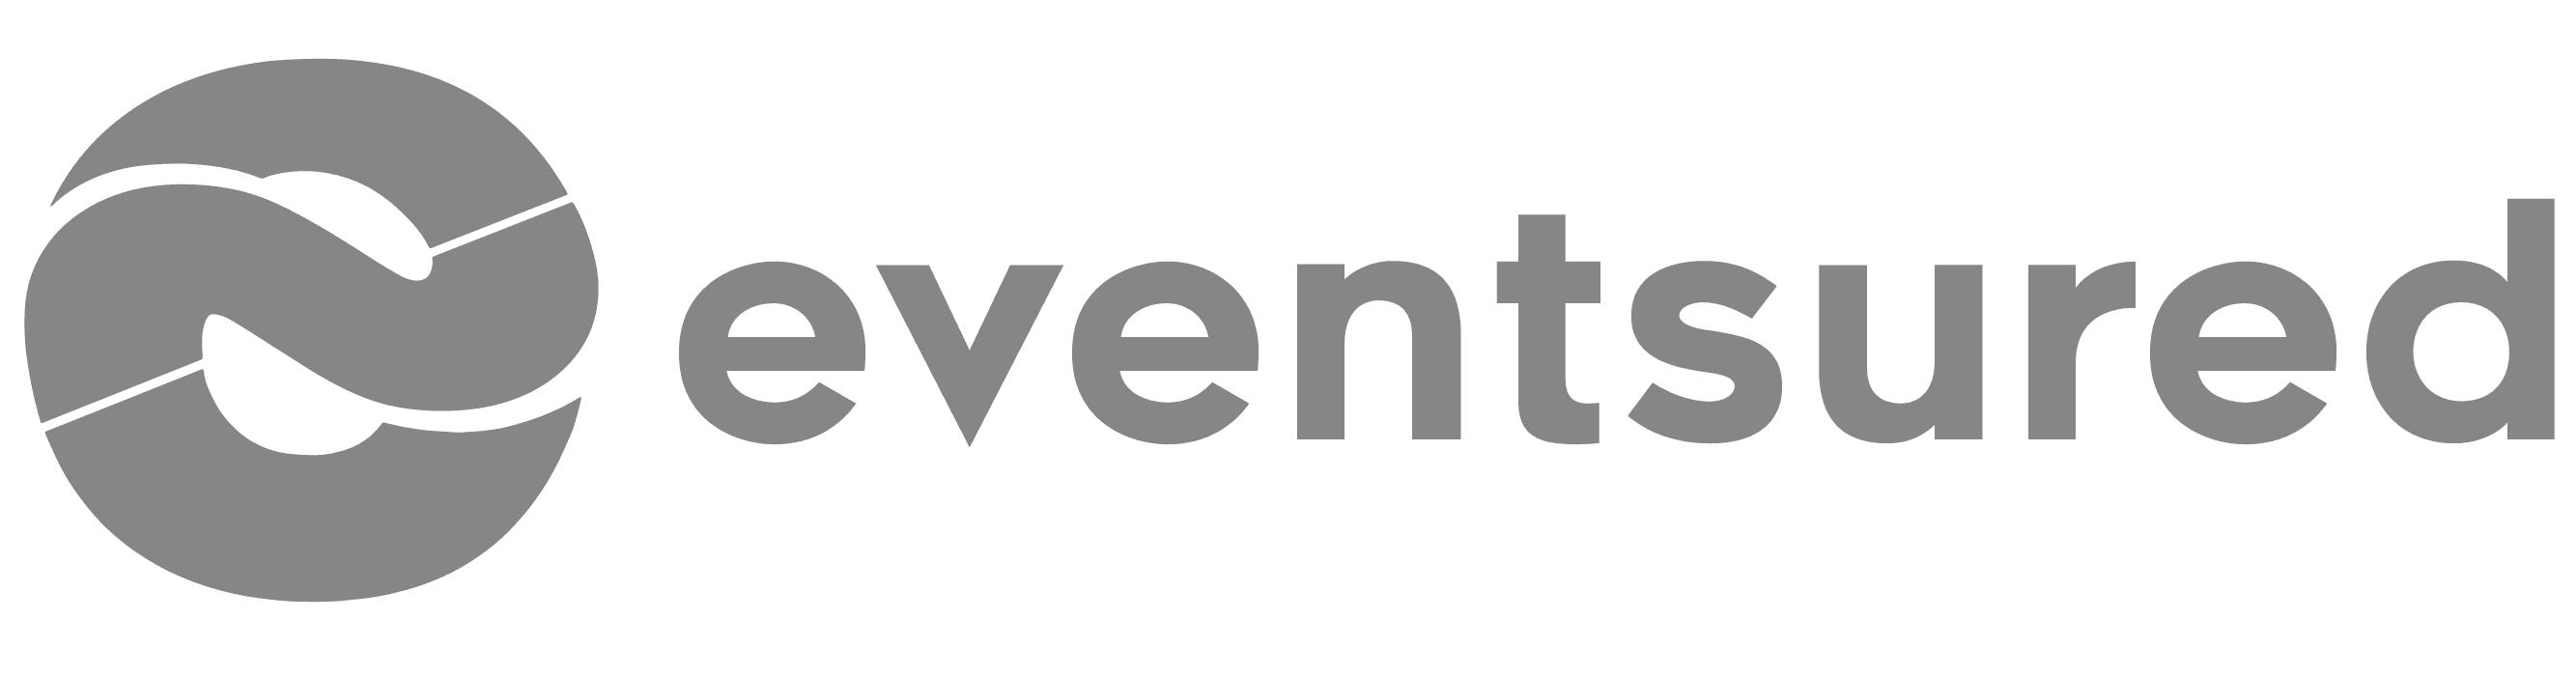 eventsured-logo